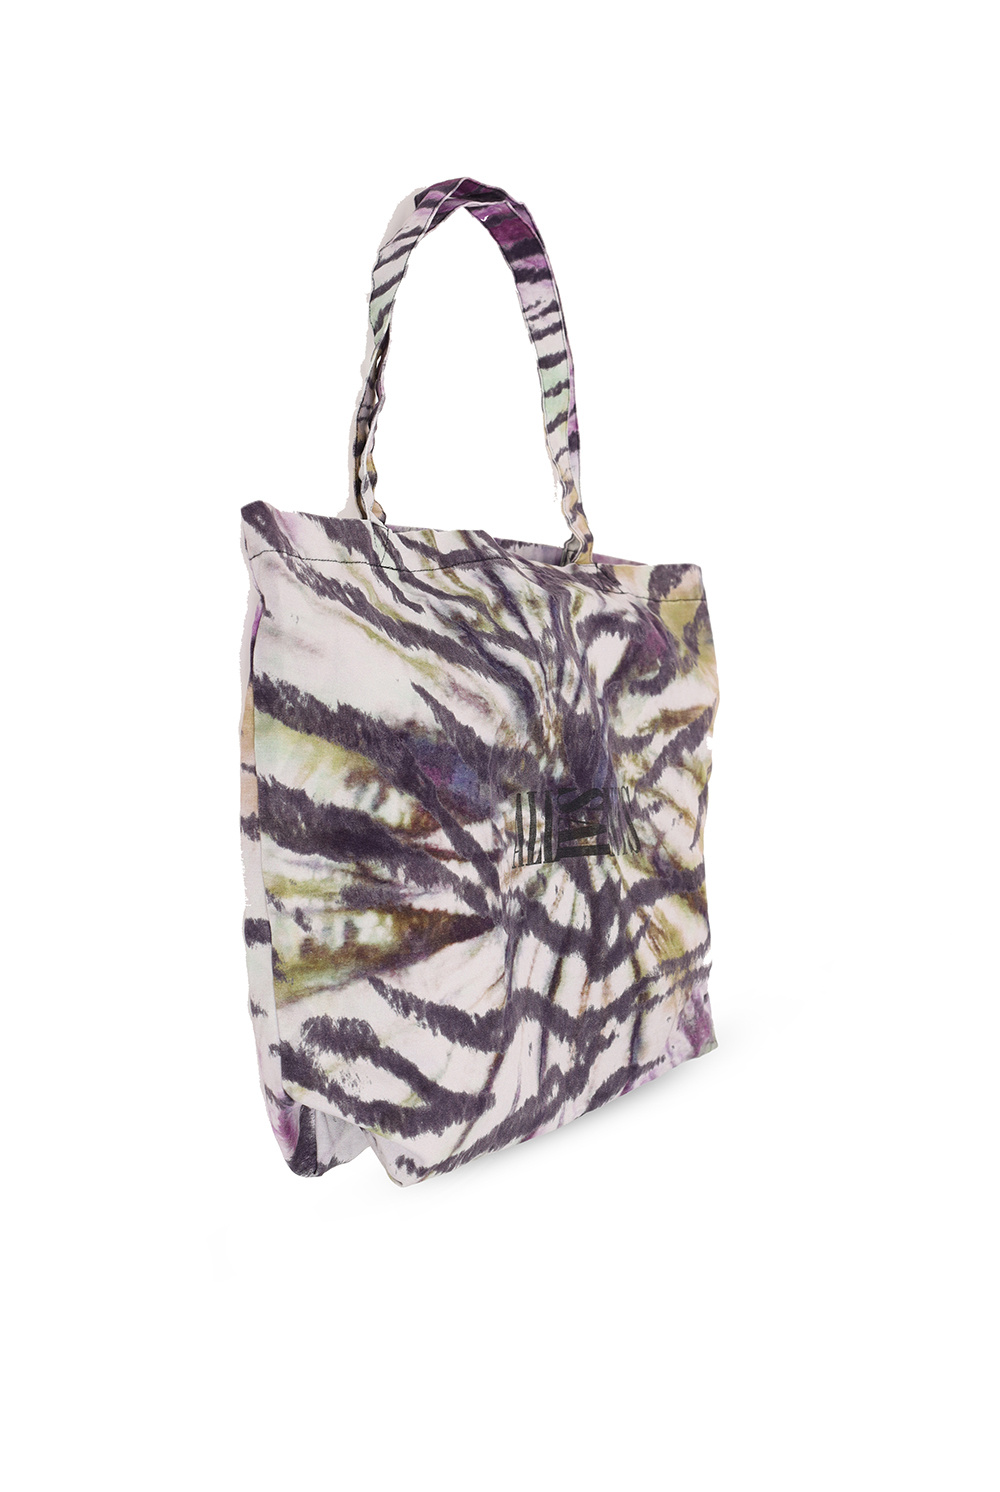 AllSaints ‘Tiger’ shopper Vuitton bag